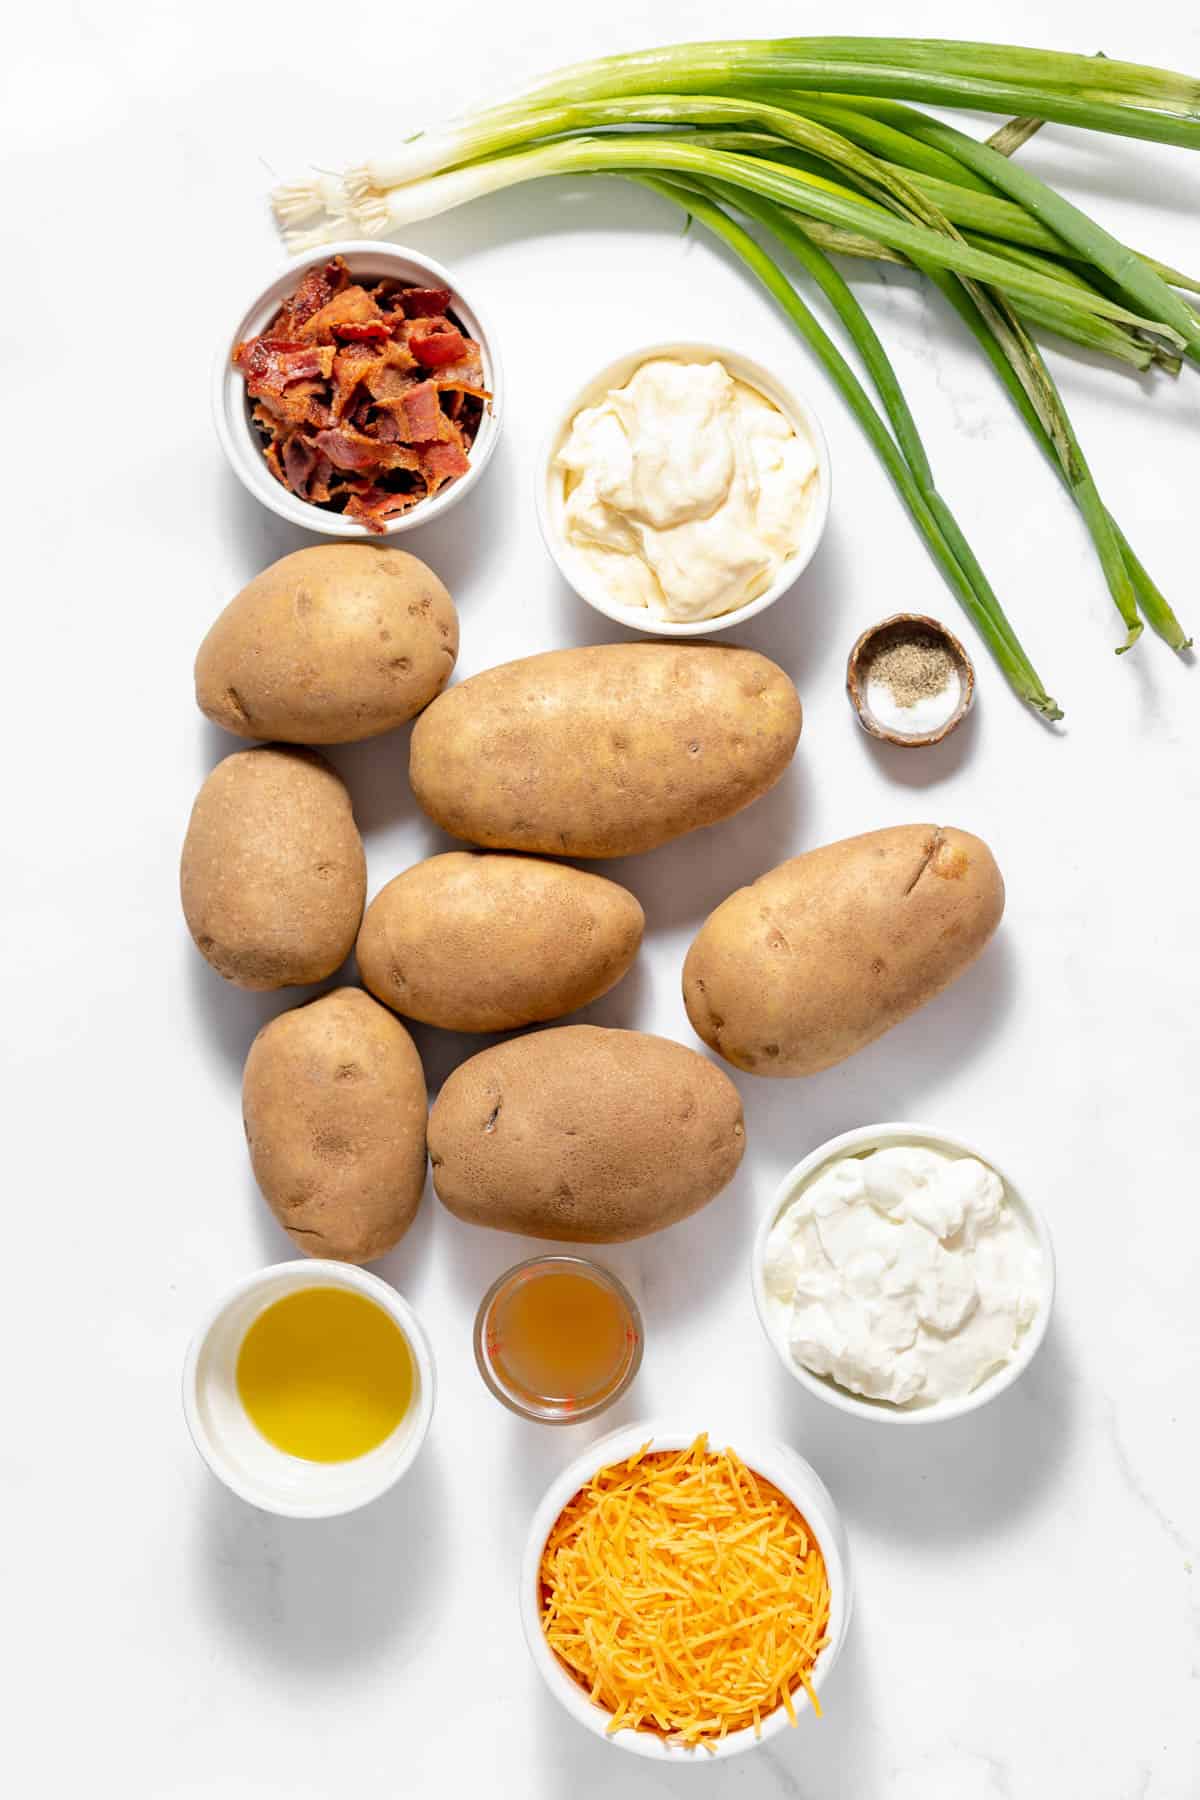 Ingredients for loaded baked potato salad.